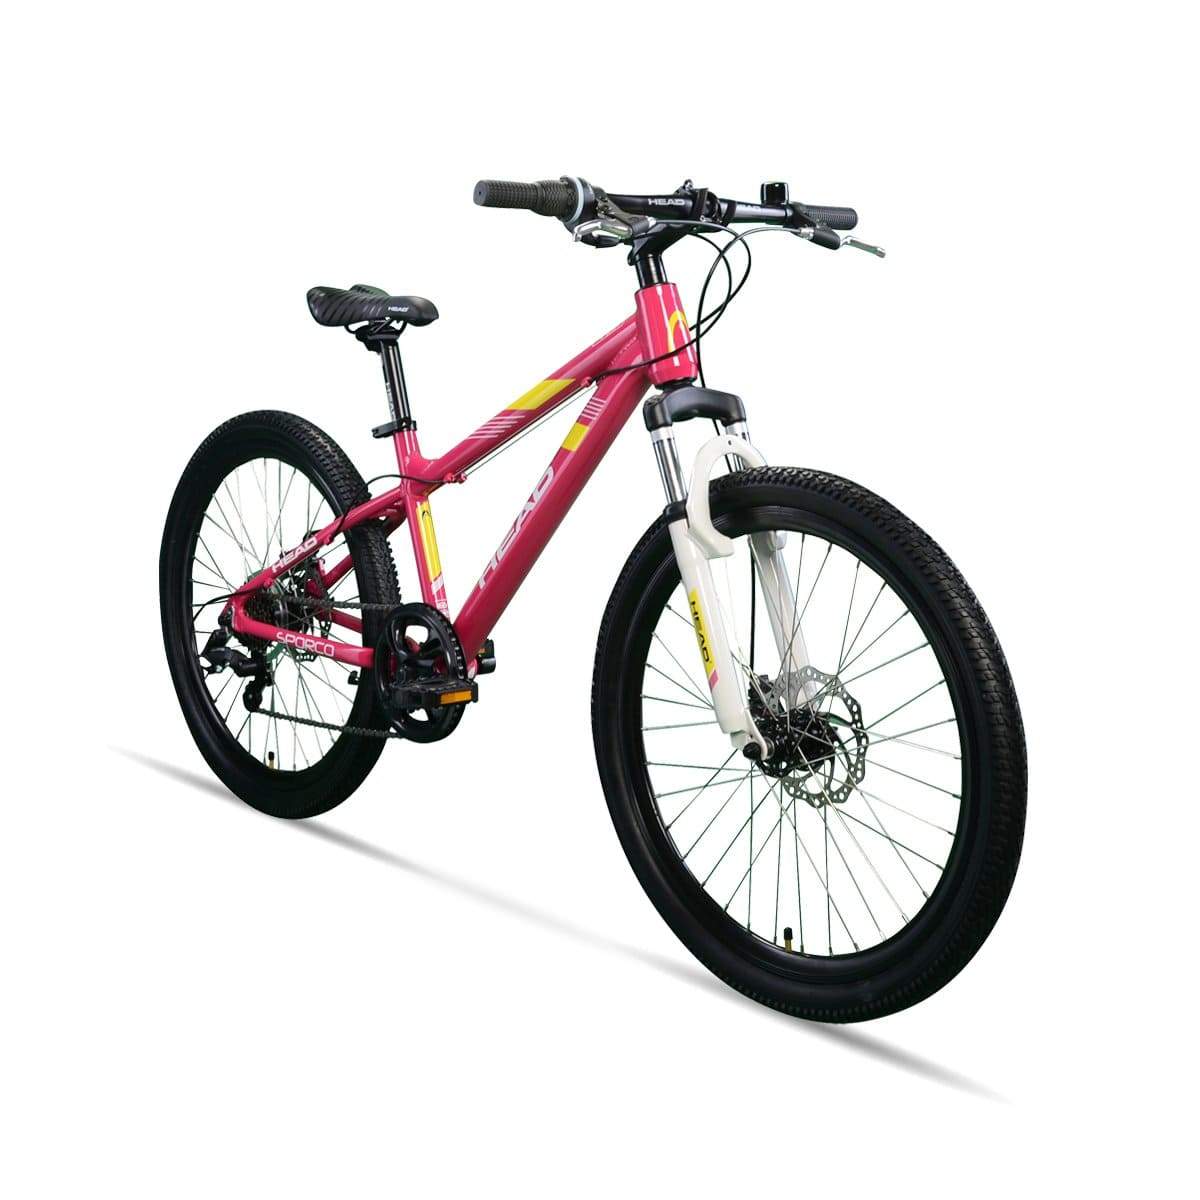 Head Sporco 24" Kids Bike - Pink